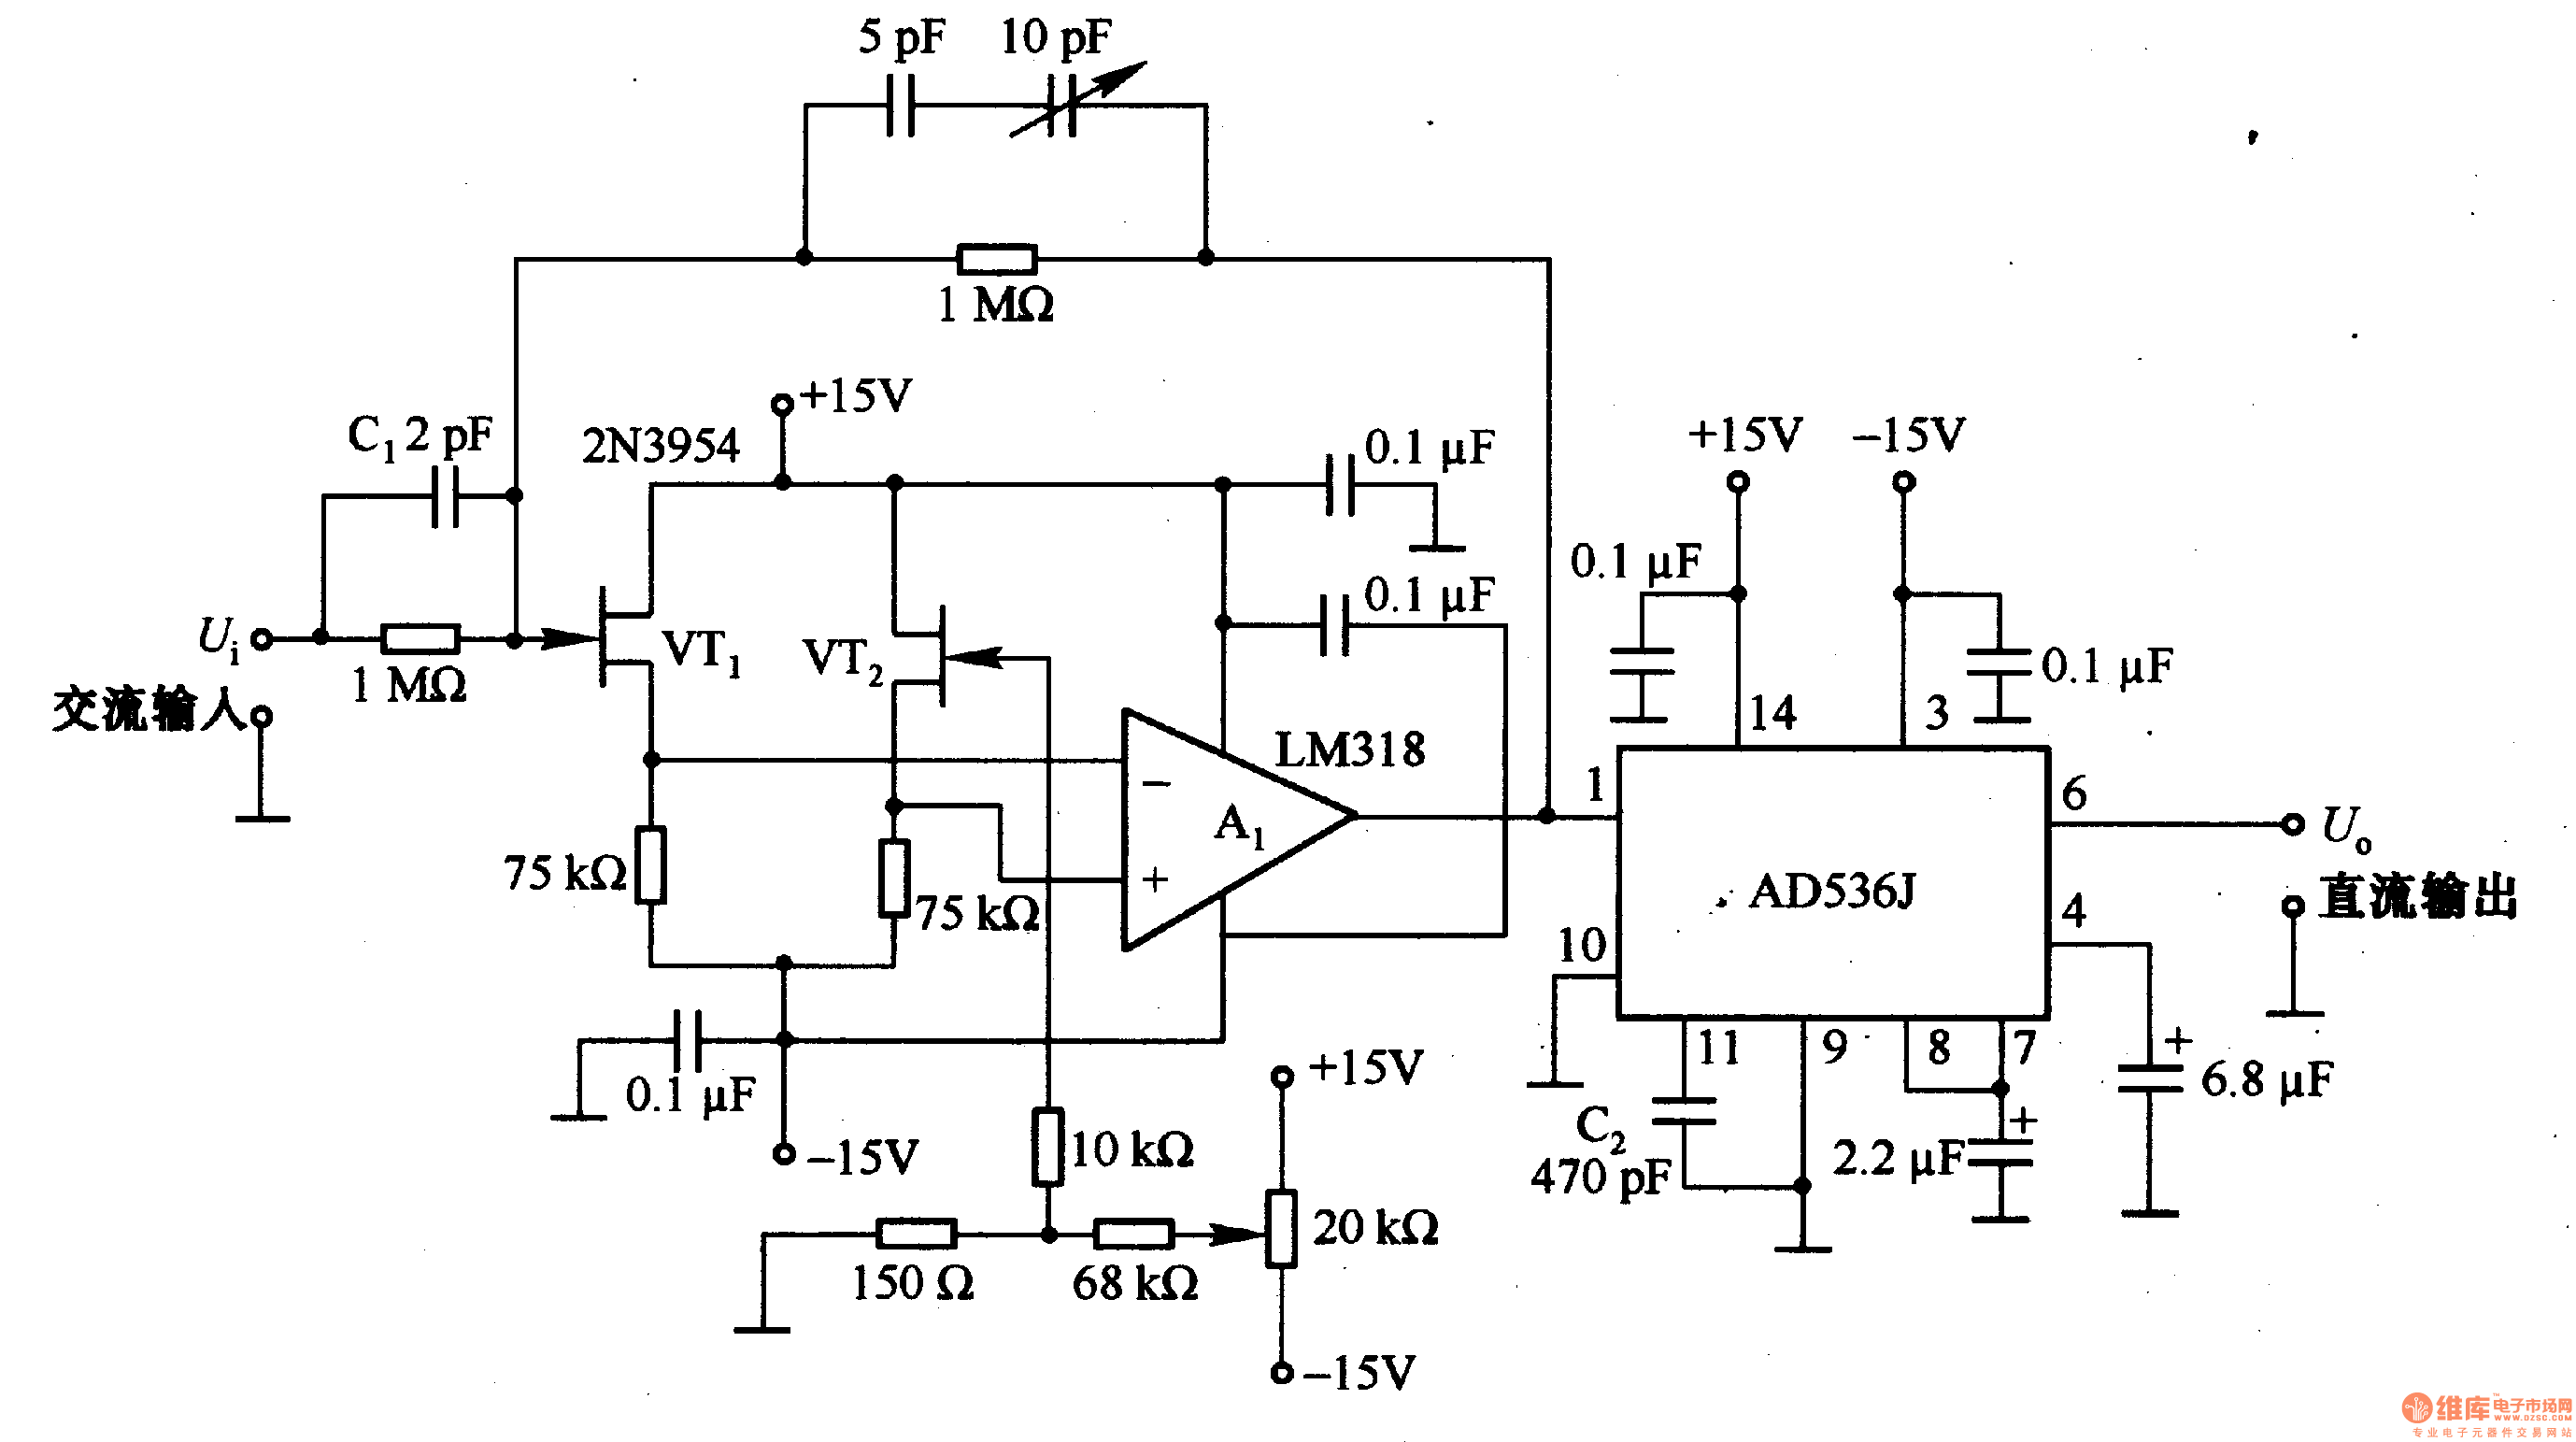 / DC converter circuit composed of AD536J - Basic_Circuit - Circuit -